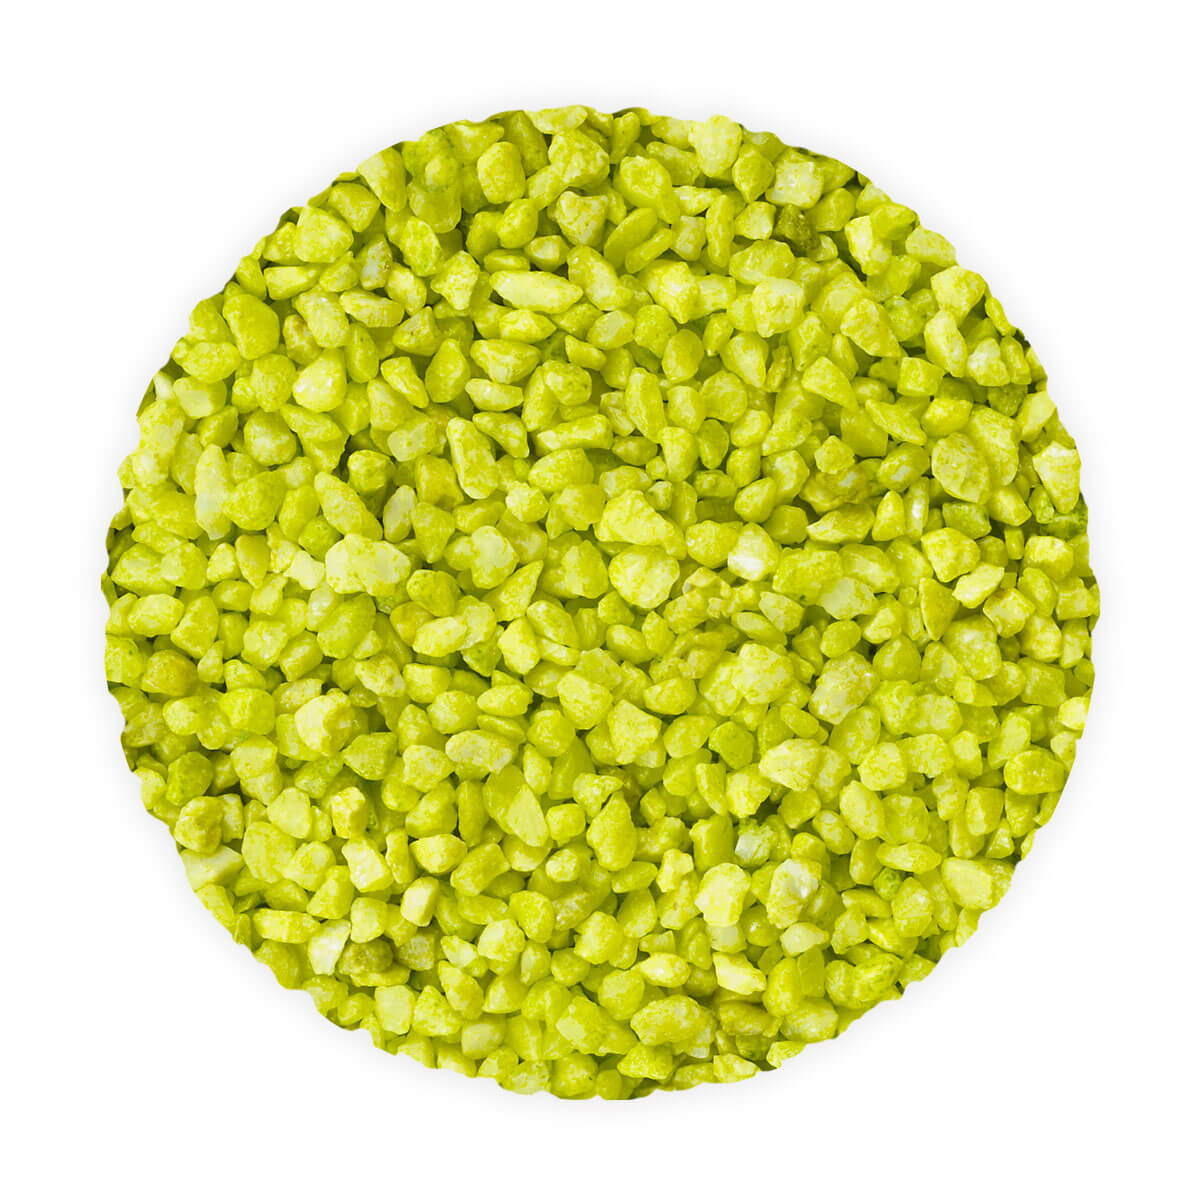 Deco-Granulat - apfelgrün - Packung à 1 kg